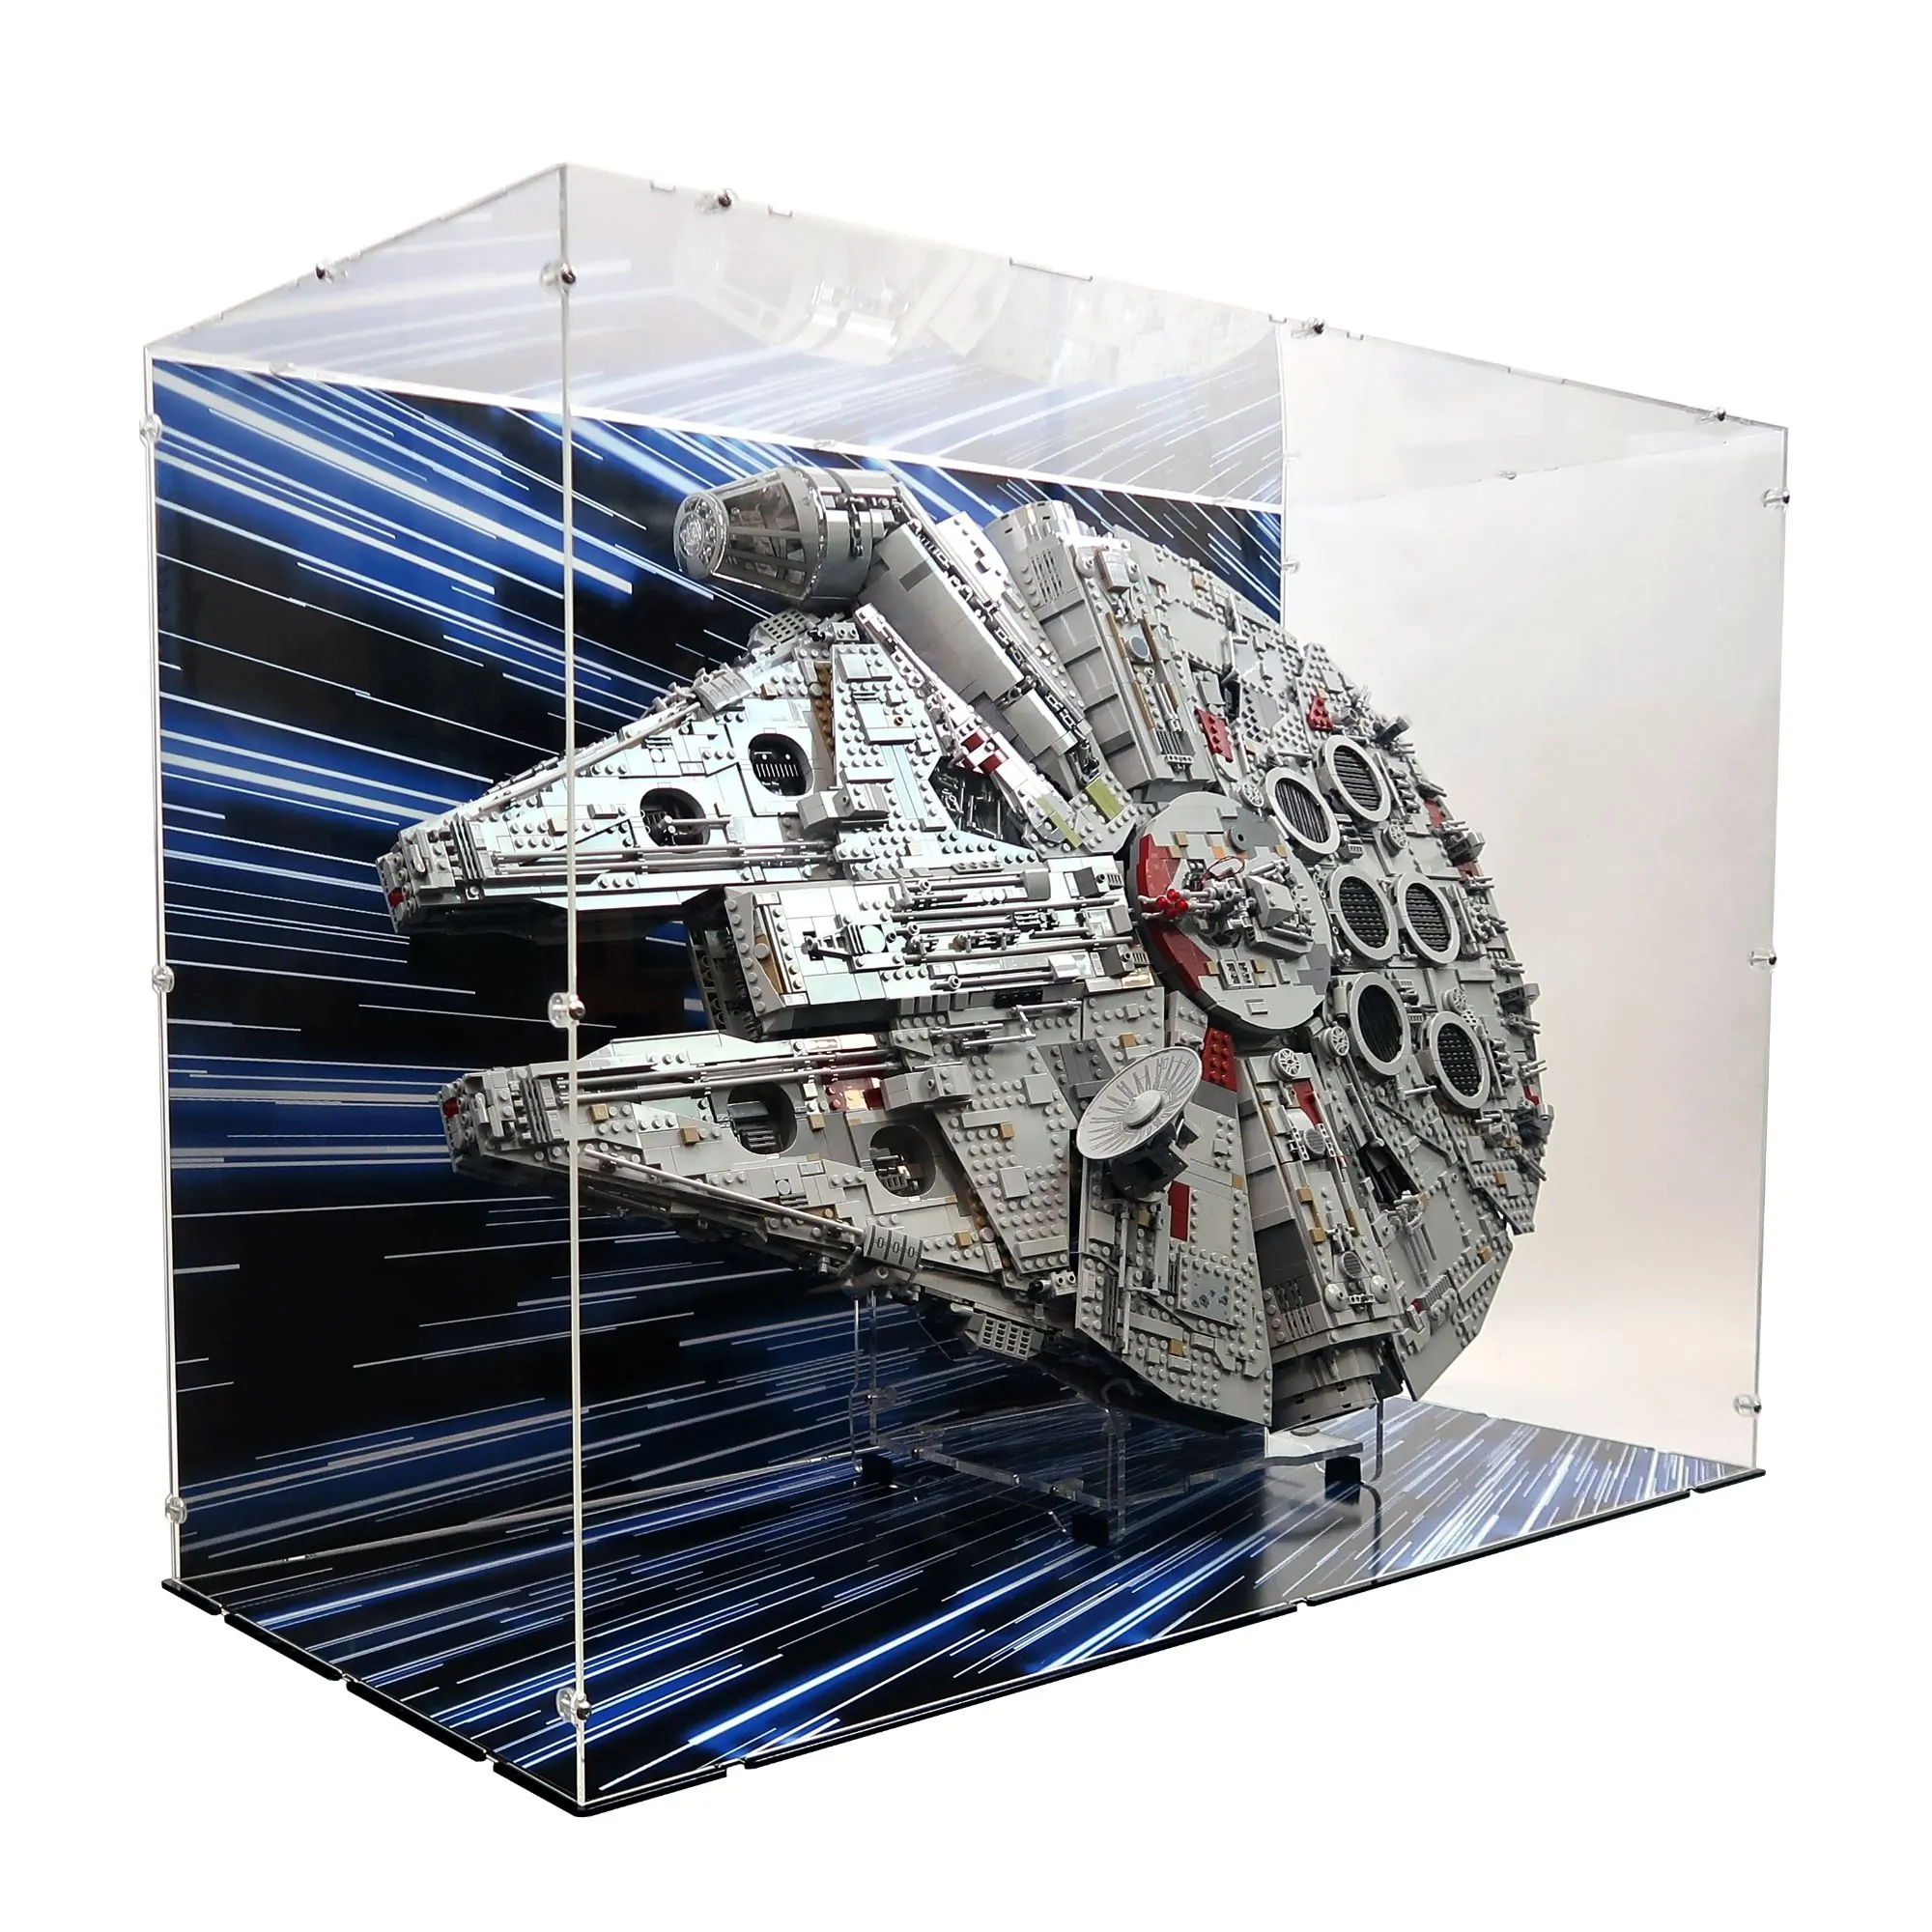 LEGO Star Wars Millennium Falcon Vertical Display Case | iDisplayit